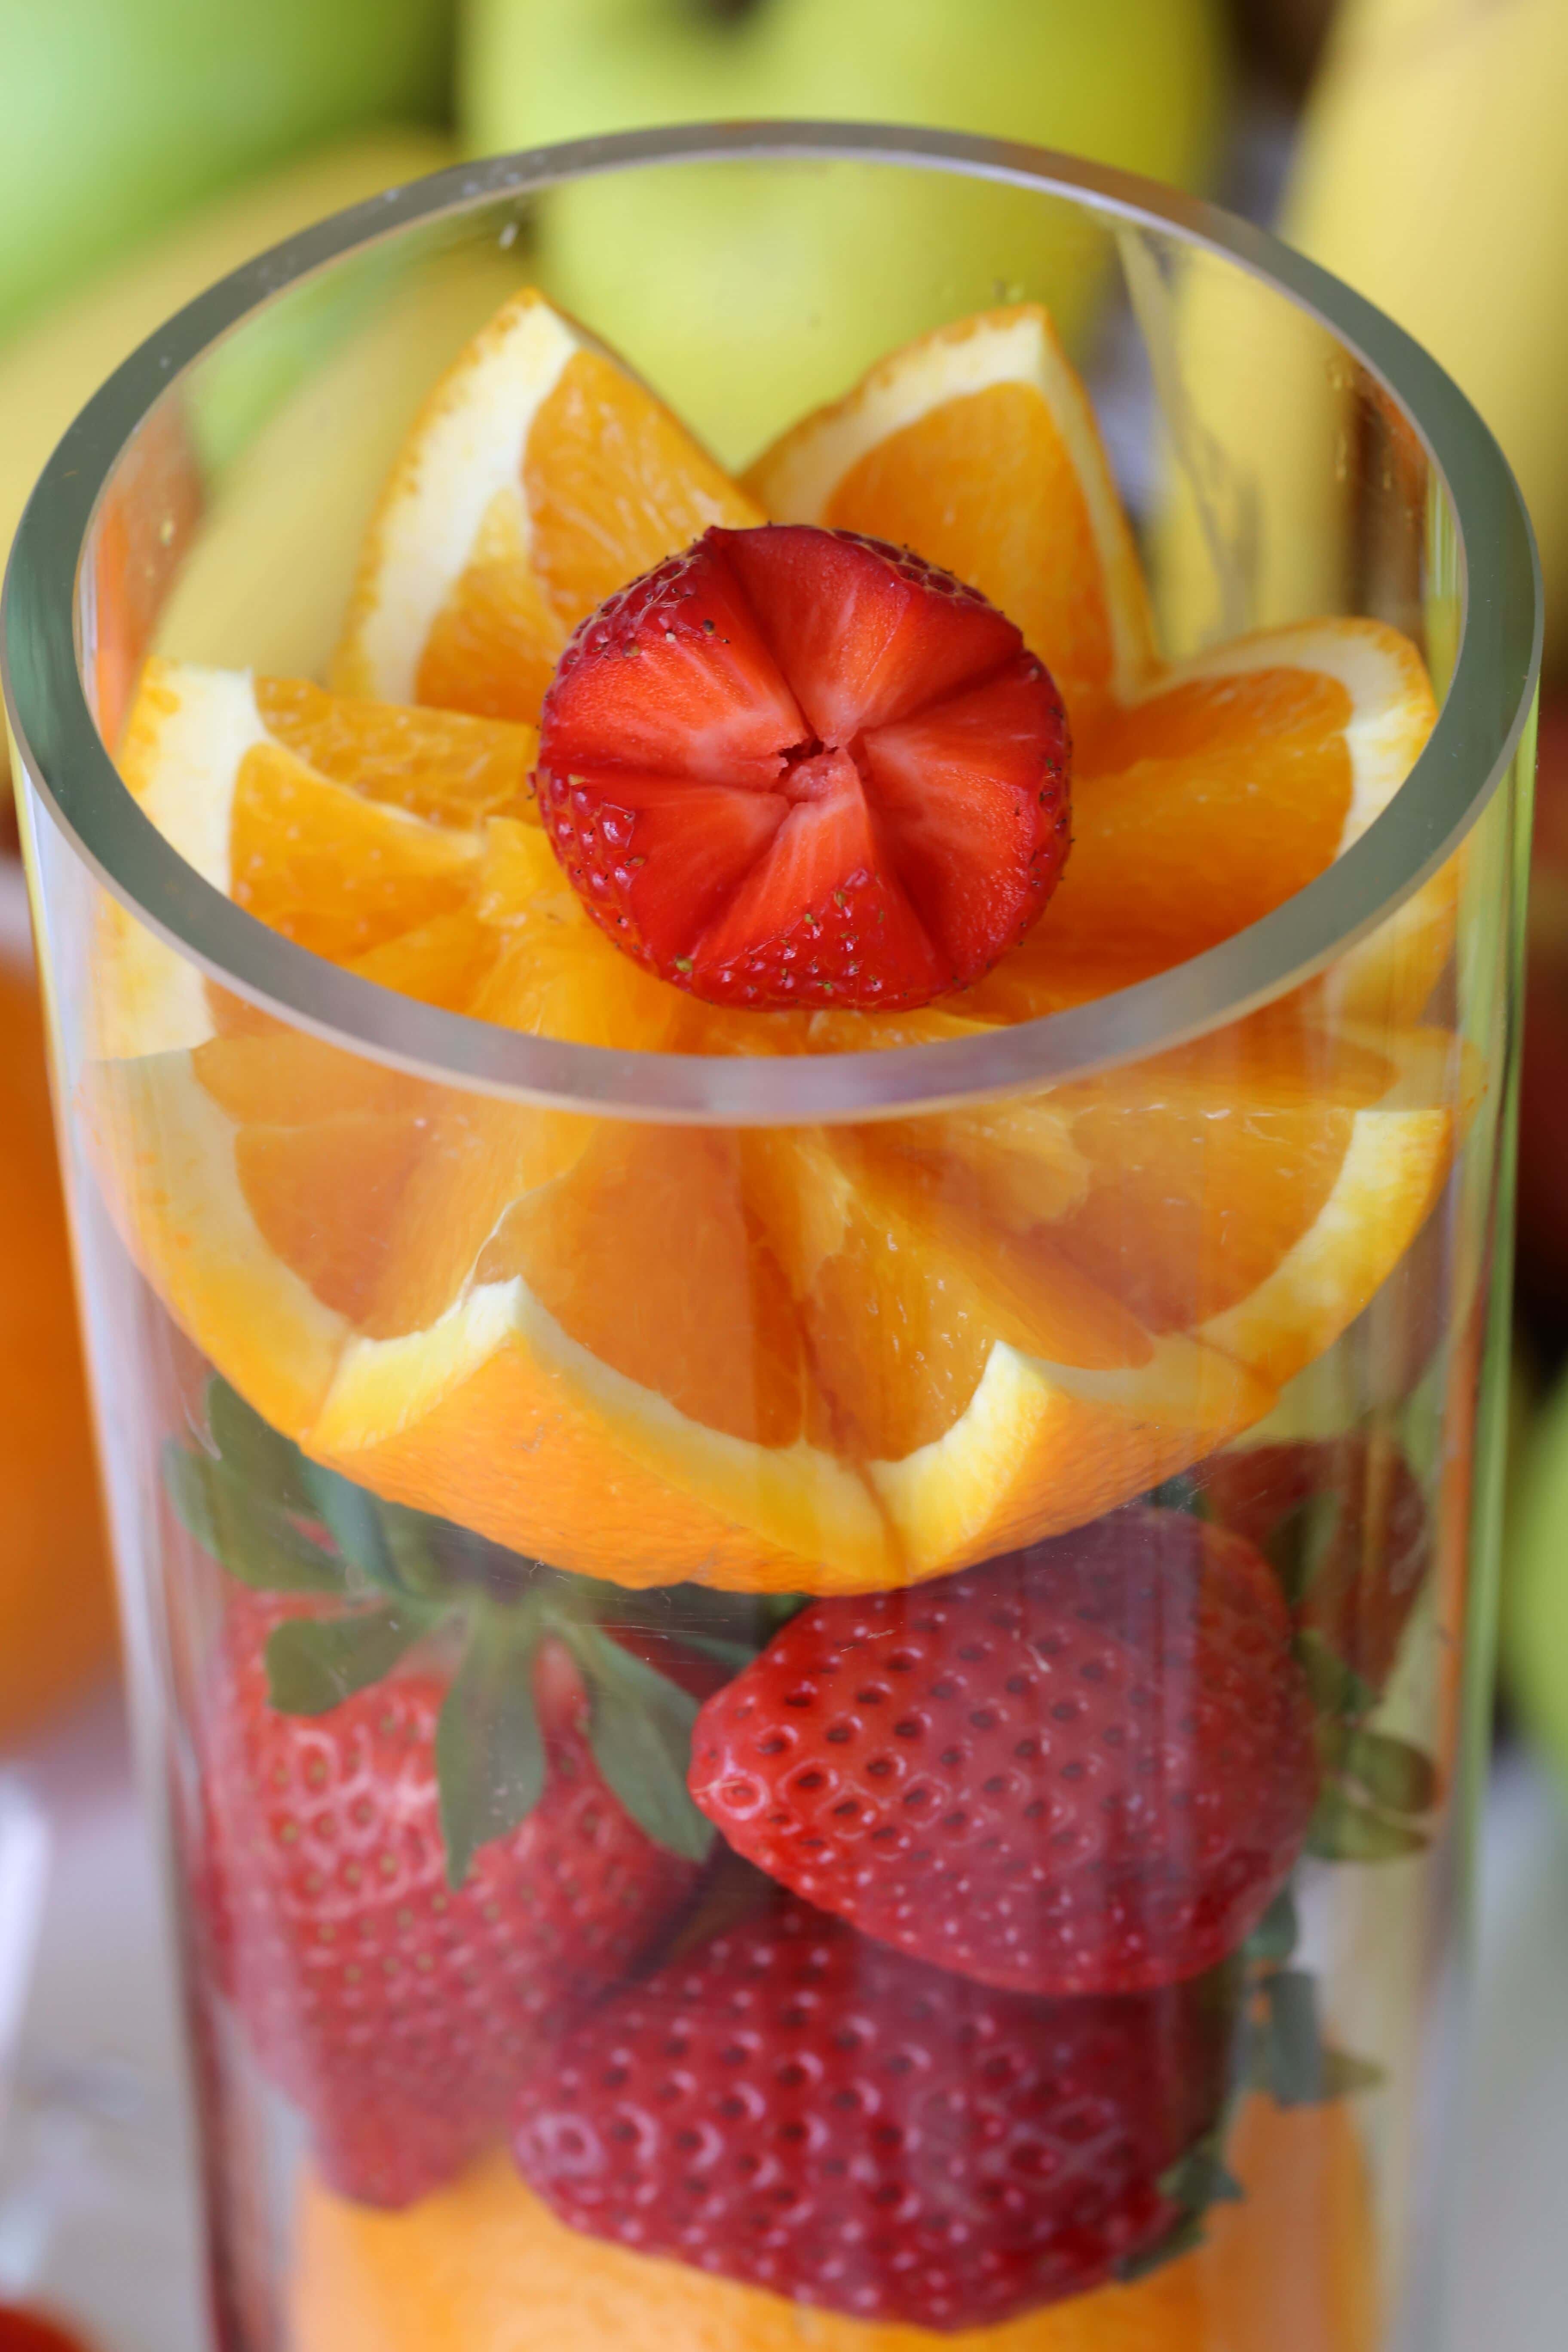 Kostenlose Bild: Obst, Erdbeeren, Orangen, Frucht-cocktail, Orange peel ...